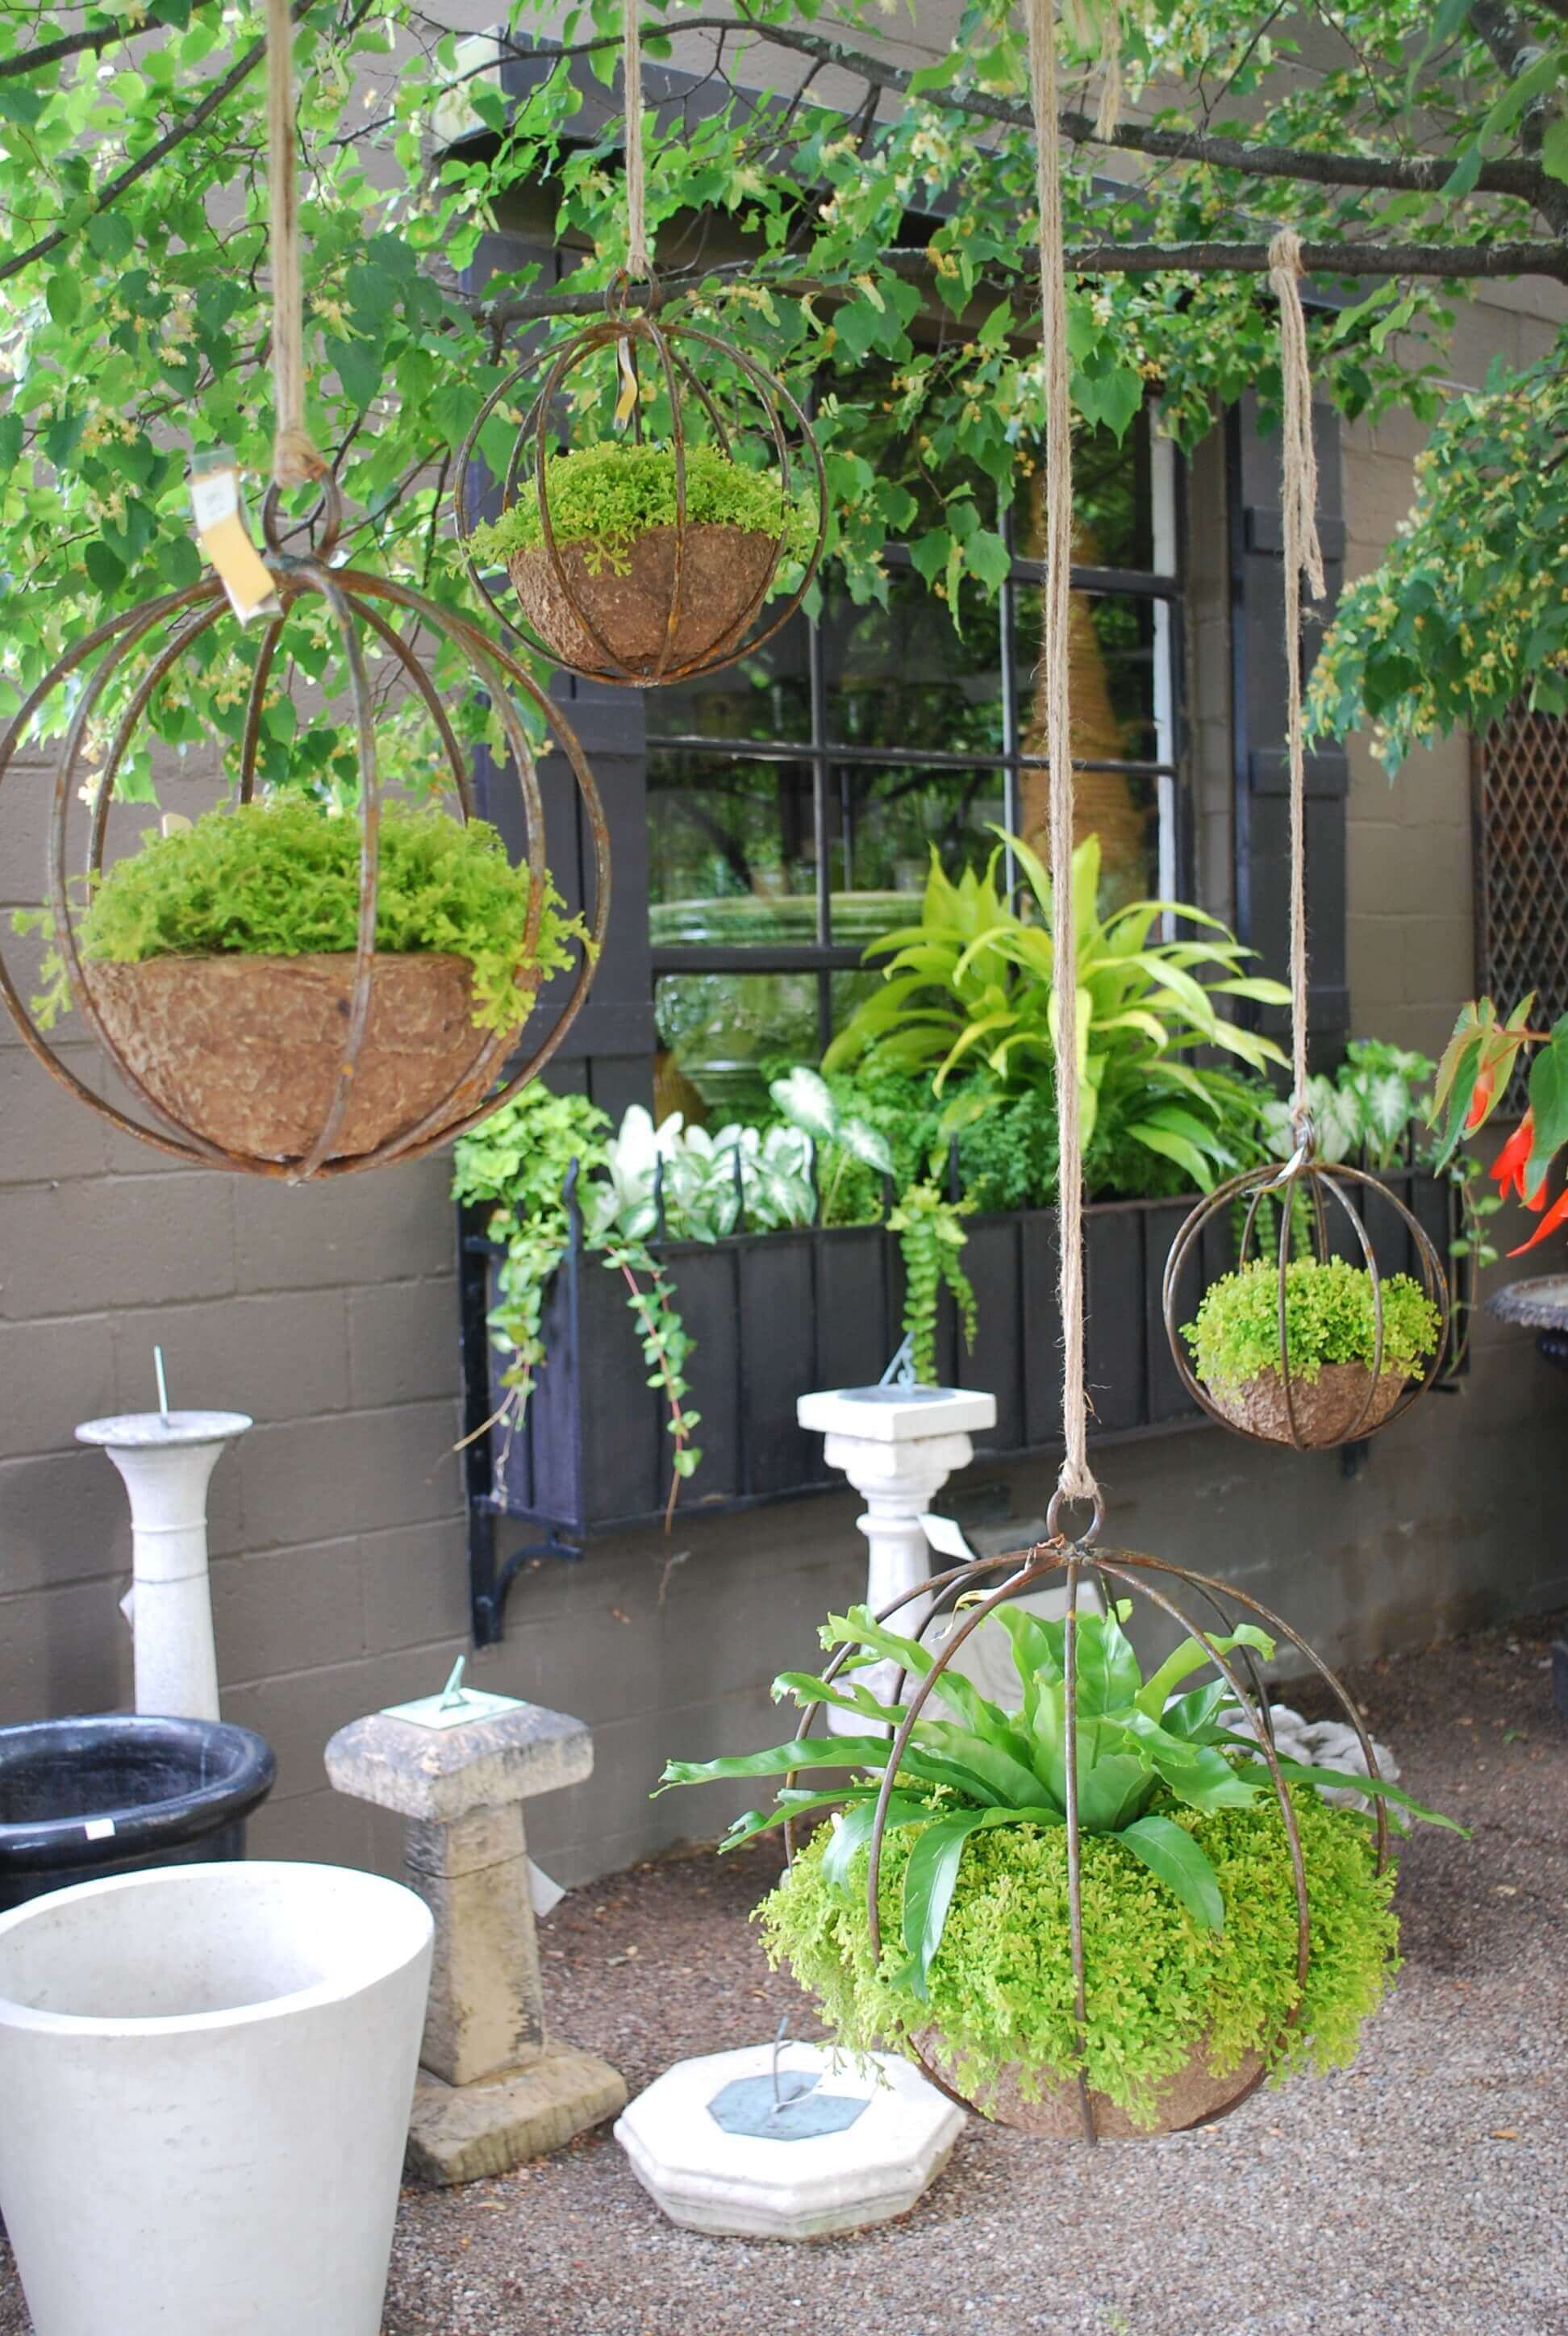 09 outdoor hanging planter ideas homebnc.jpg